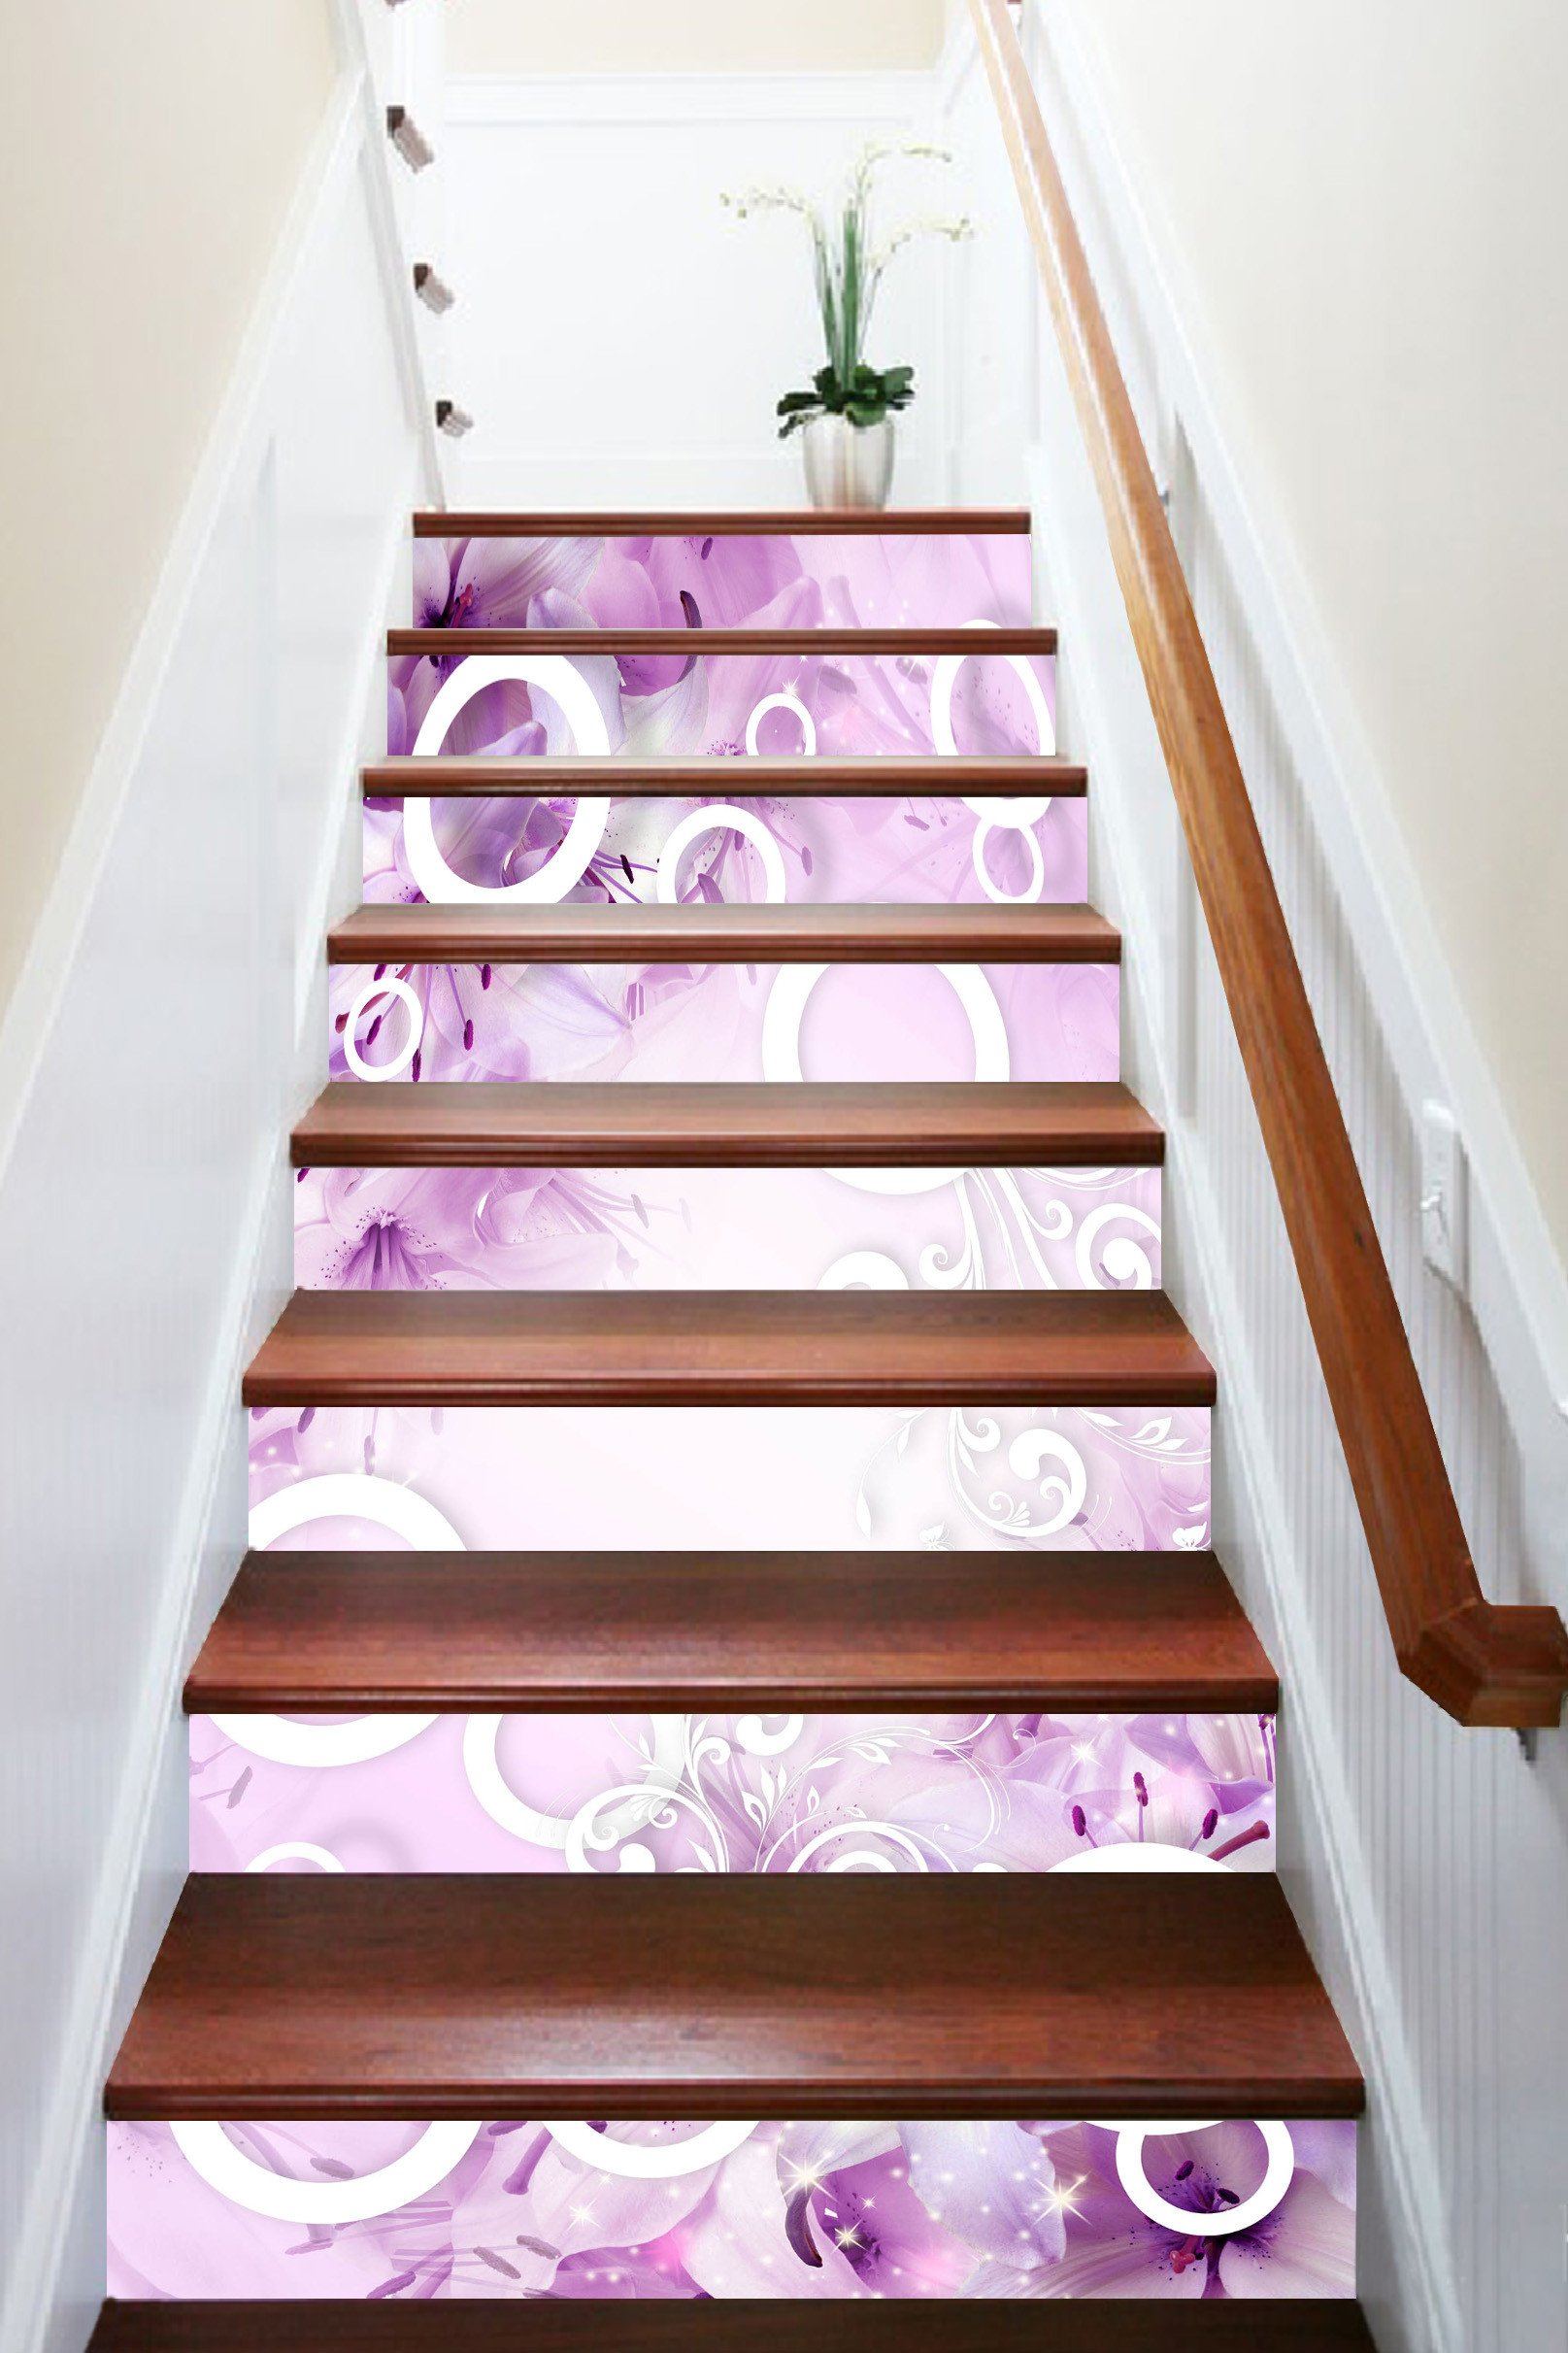 3D Rings And Flowers 1005 Stair Risers Wallpaper AJ Wallpaper 